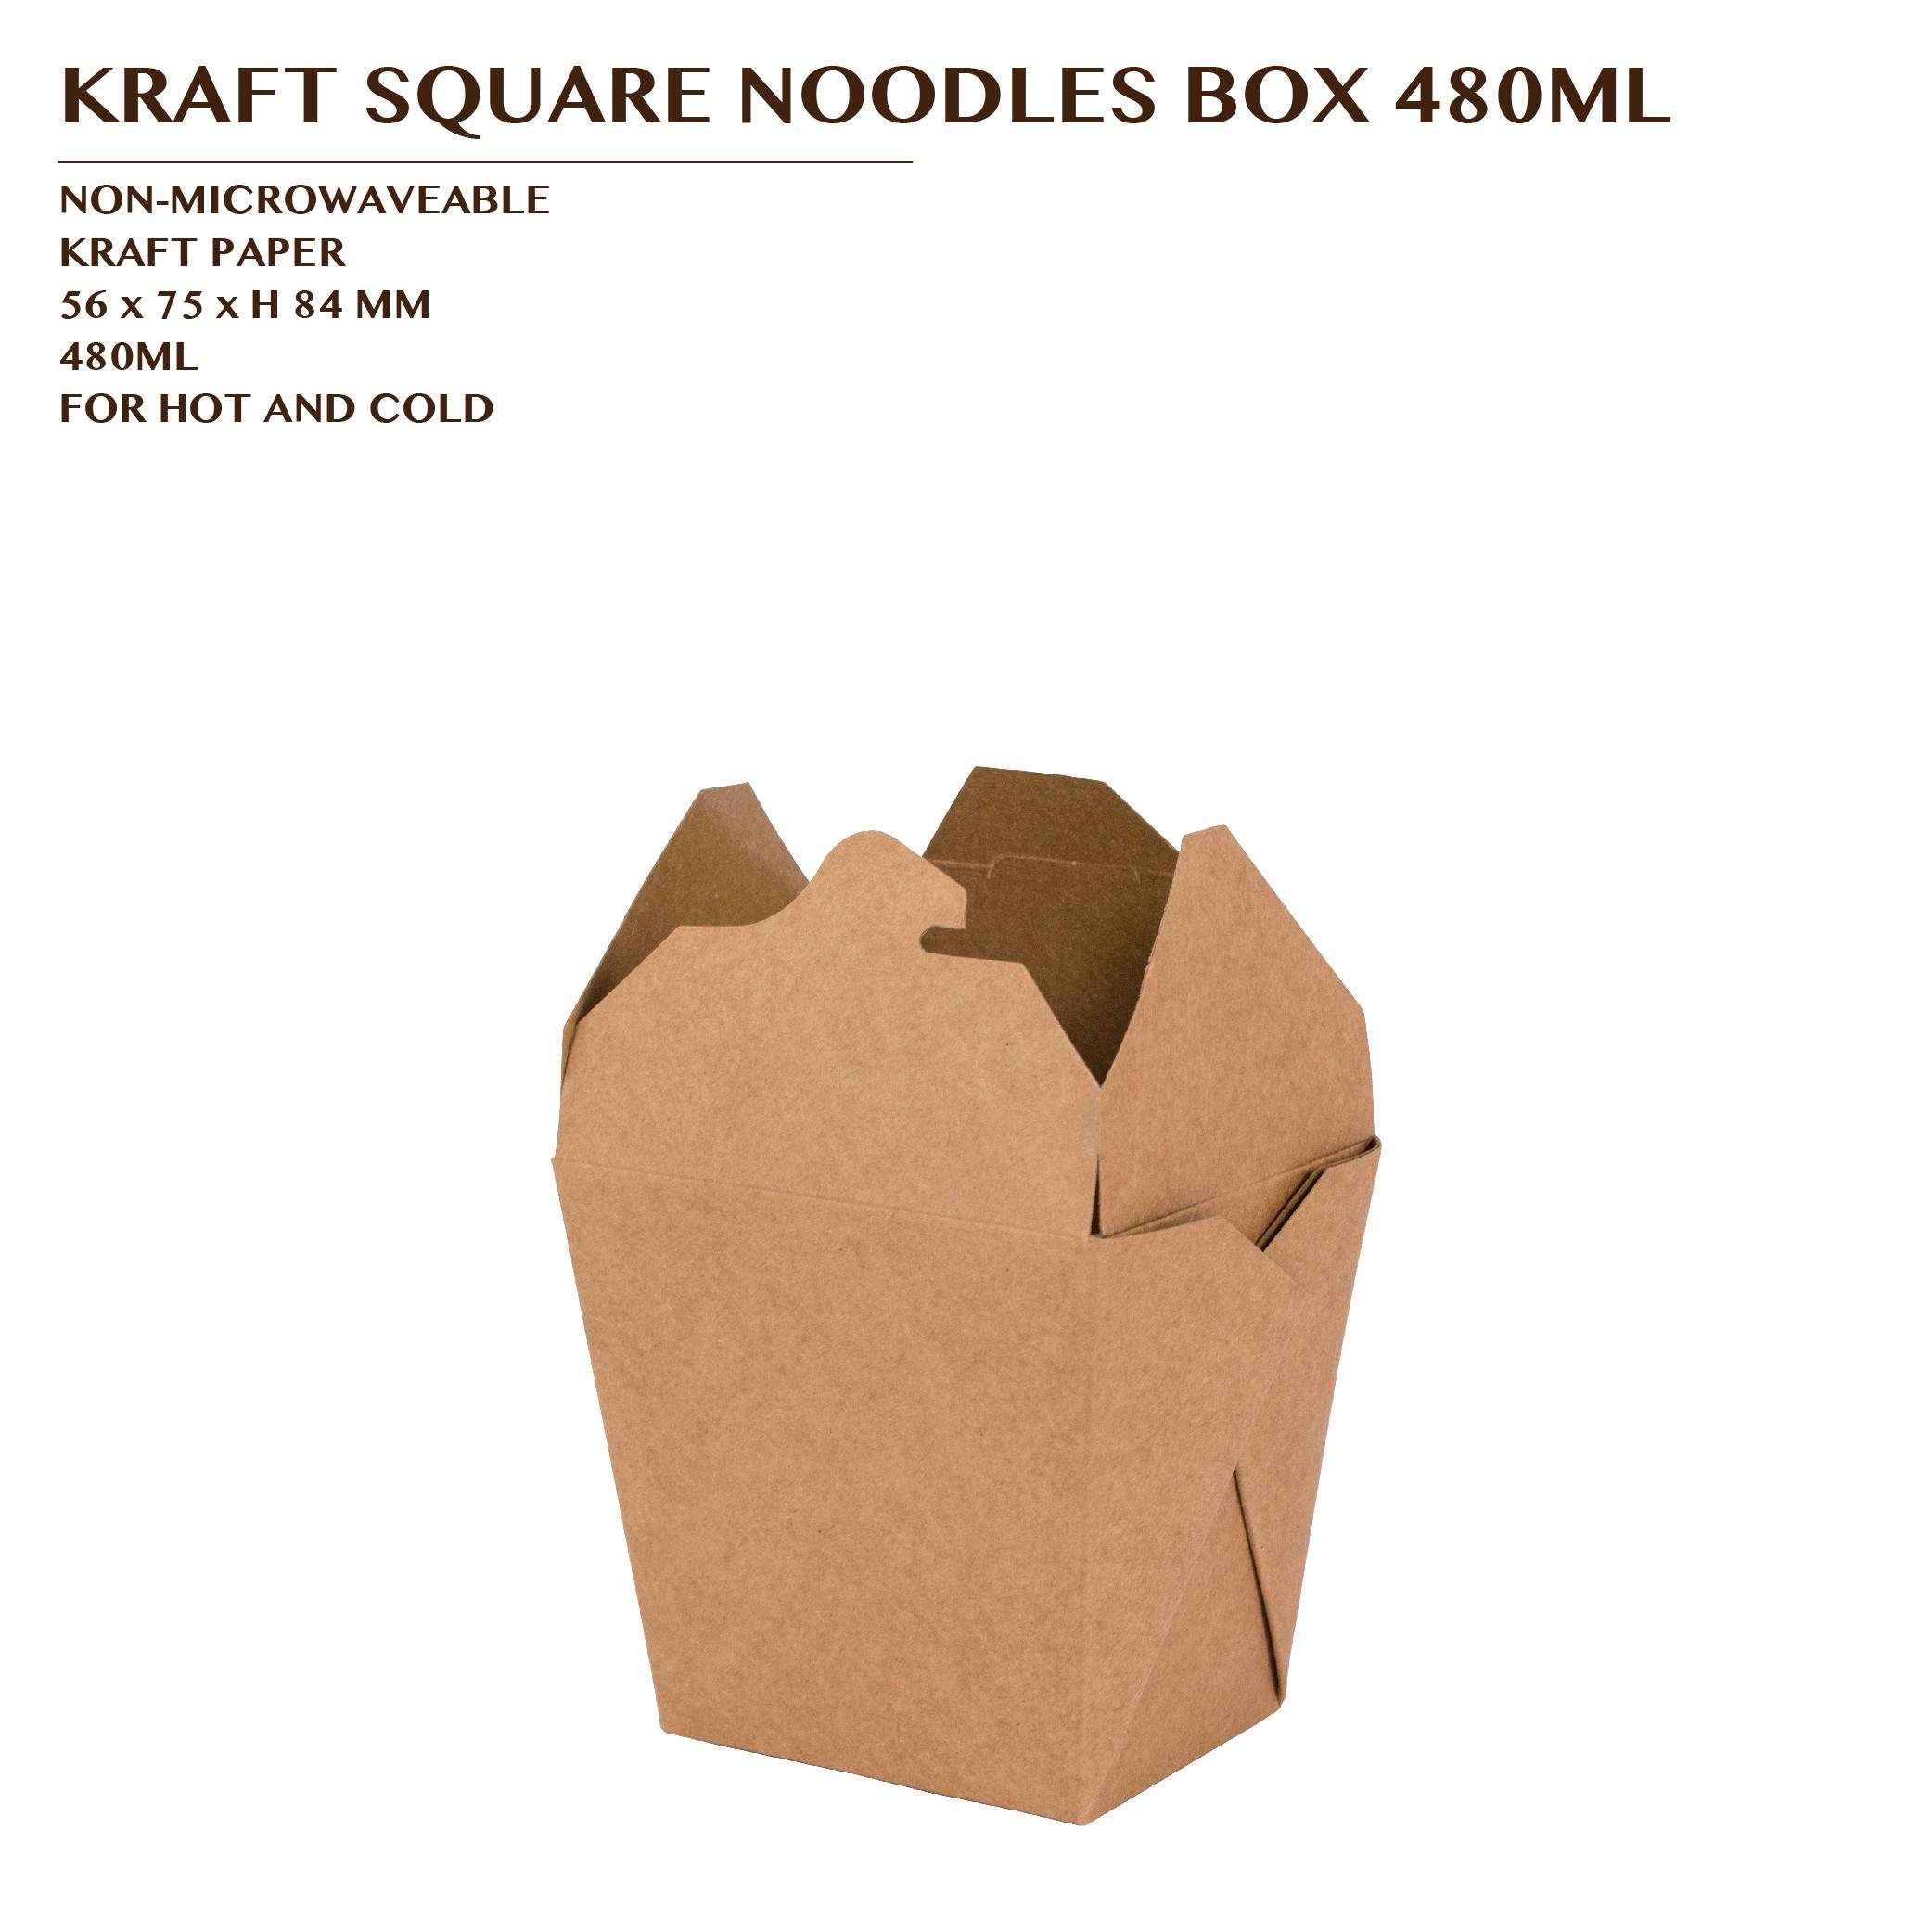 PRE-ORDER KRAFT SQUARE NOODLES BOX 480ML